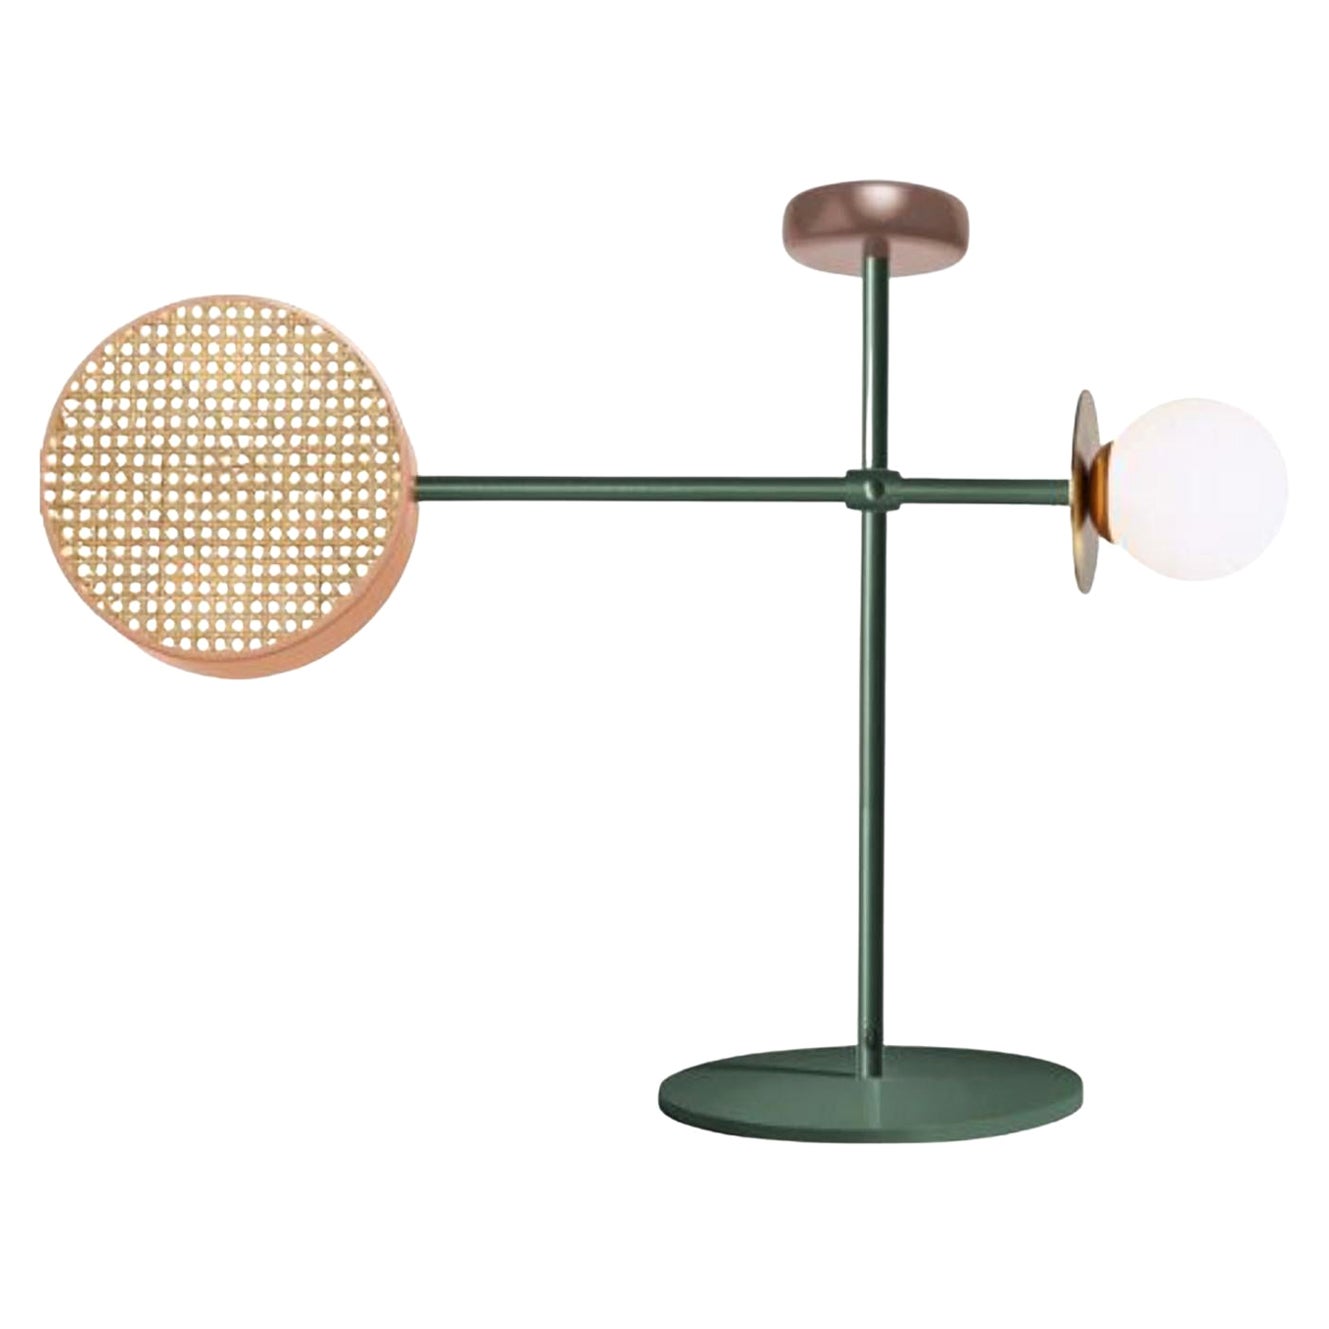 Monaco Table II Lamp by Dooq